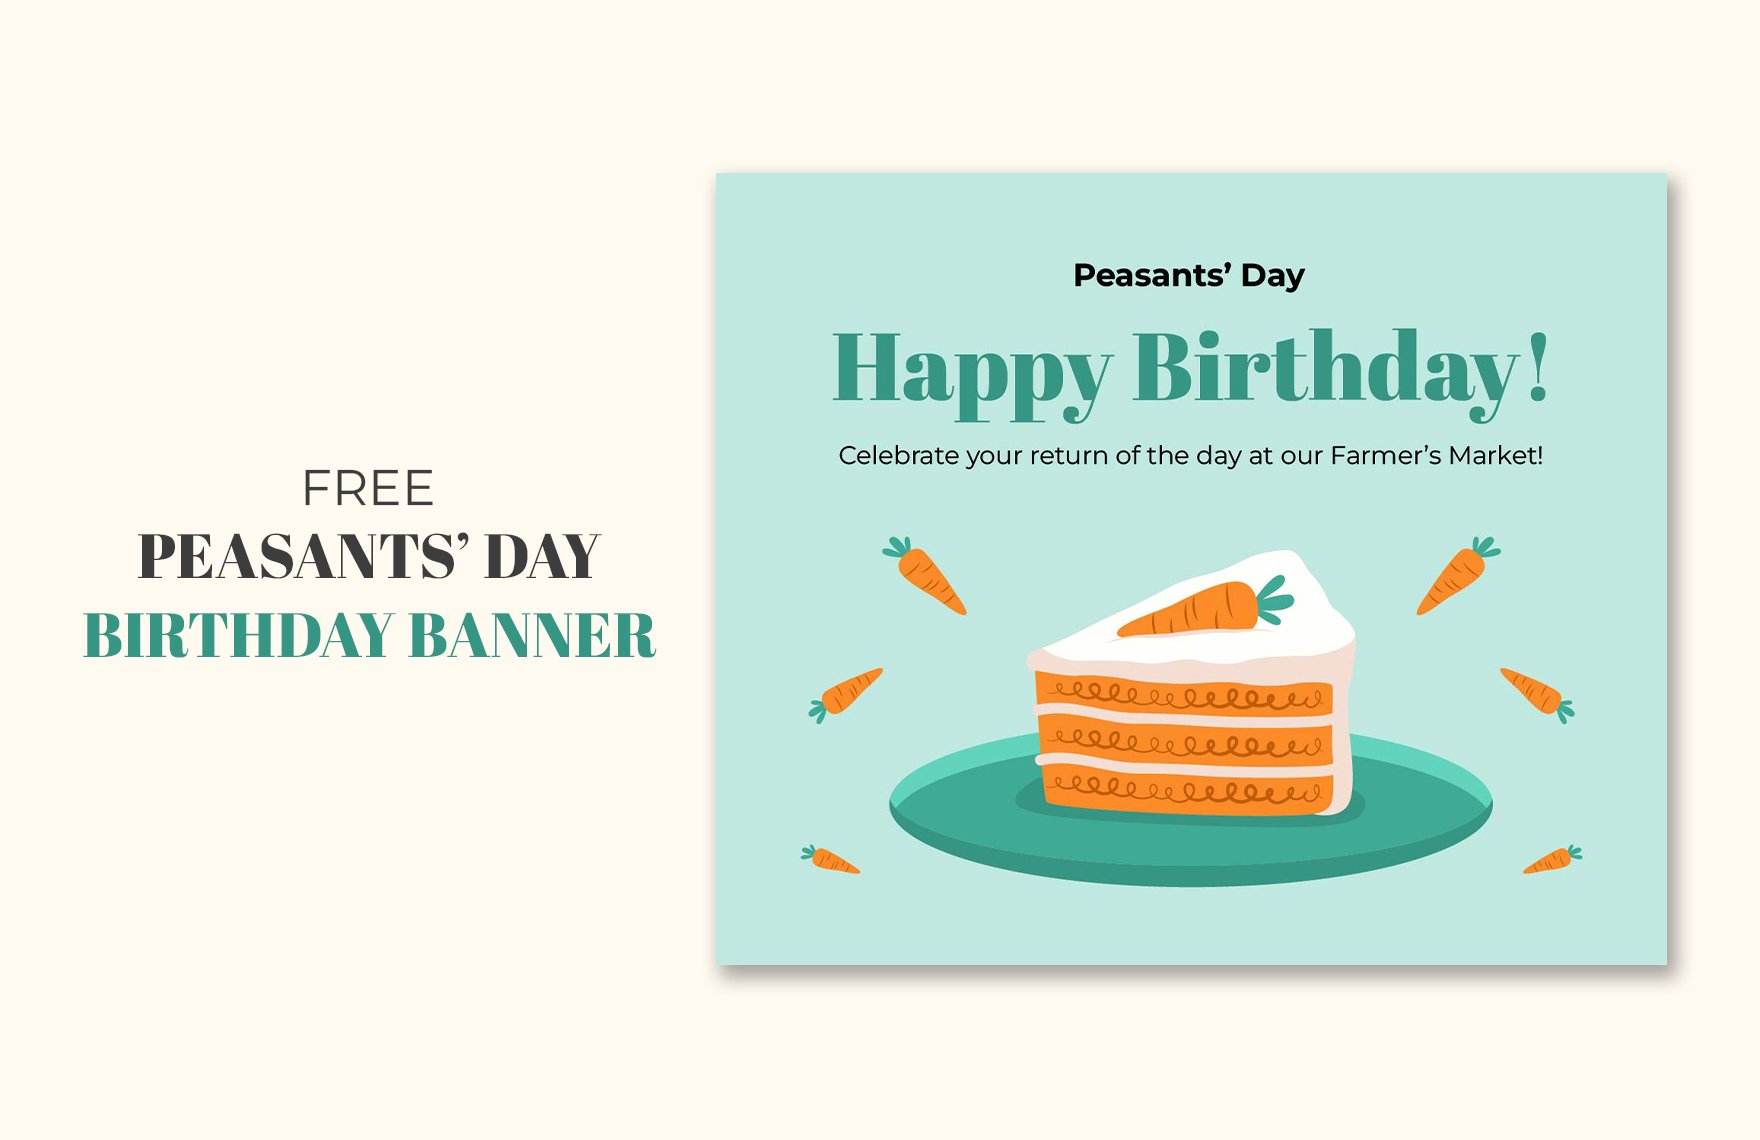 Free Peasant's Day Birthday Banner in PDF, Illustrator, SVG, JPG